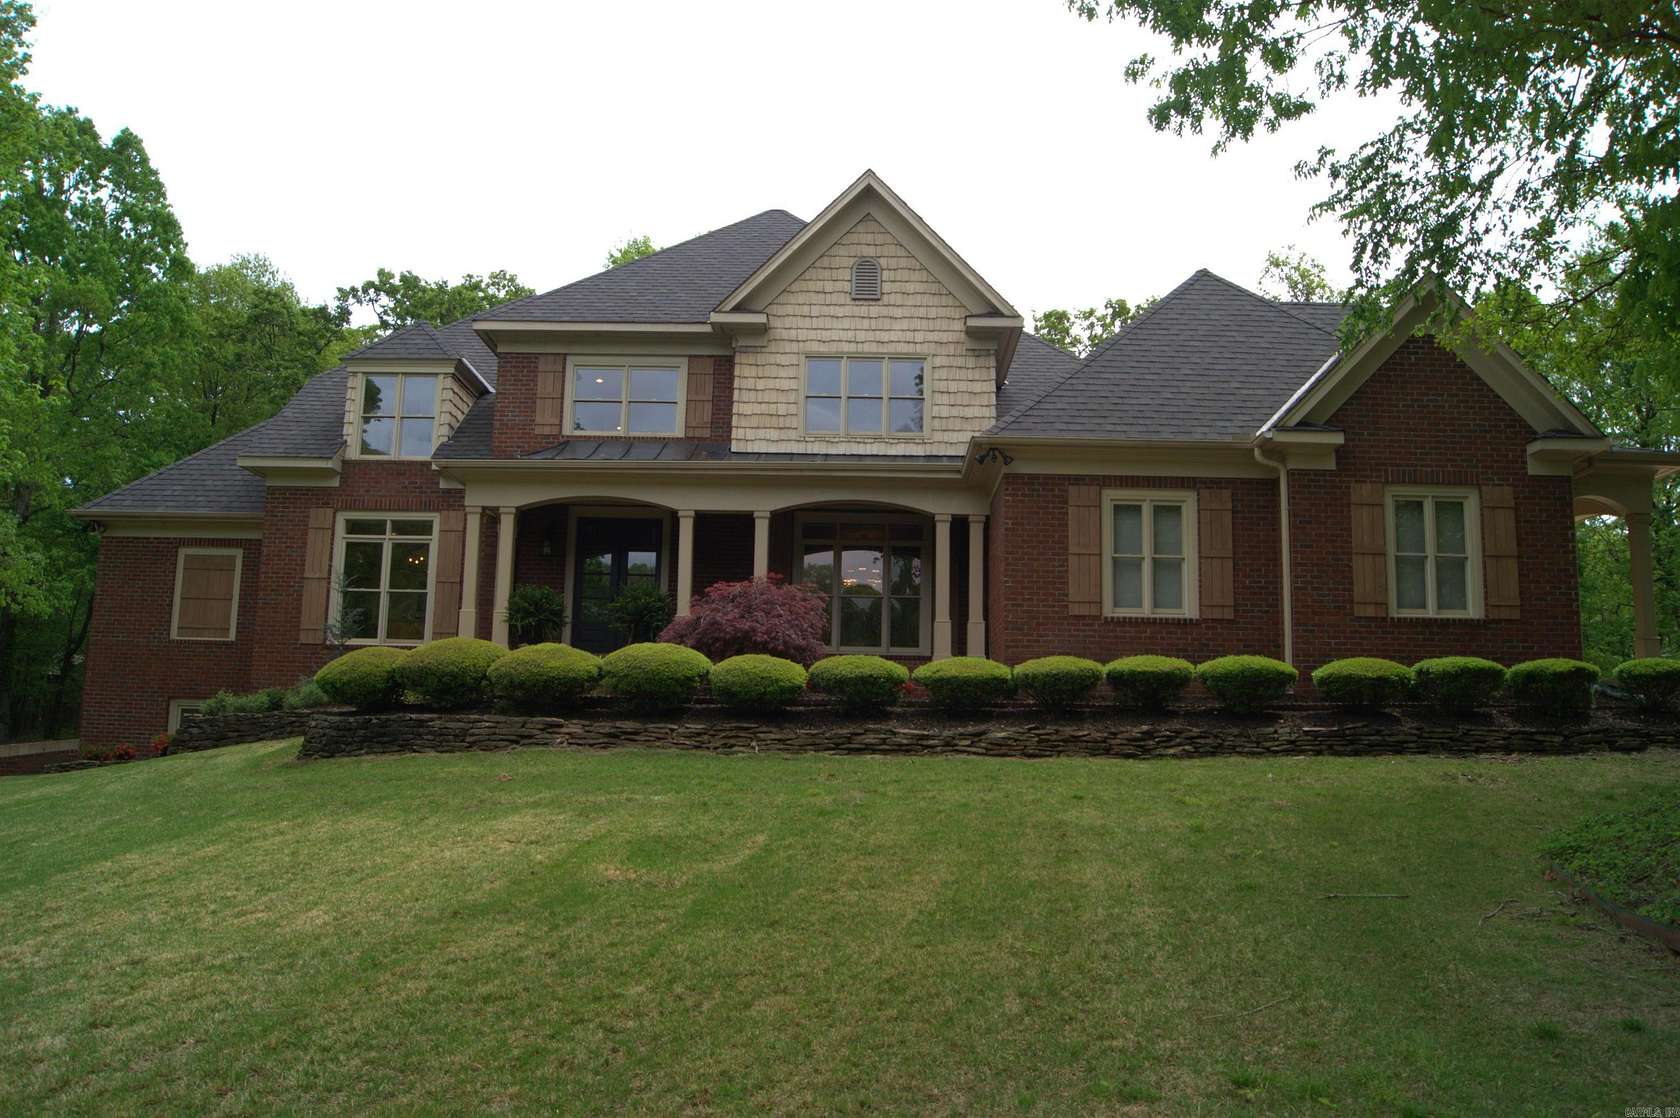 2.6 Acres of Residential Land with Home for Sale in Jonesboro, Arkansas